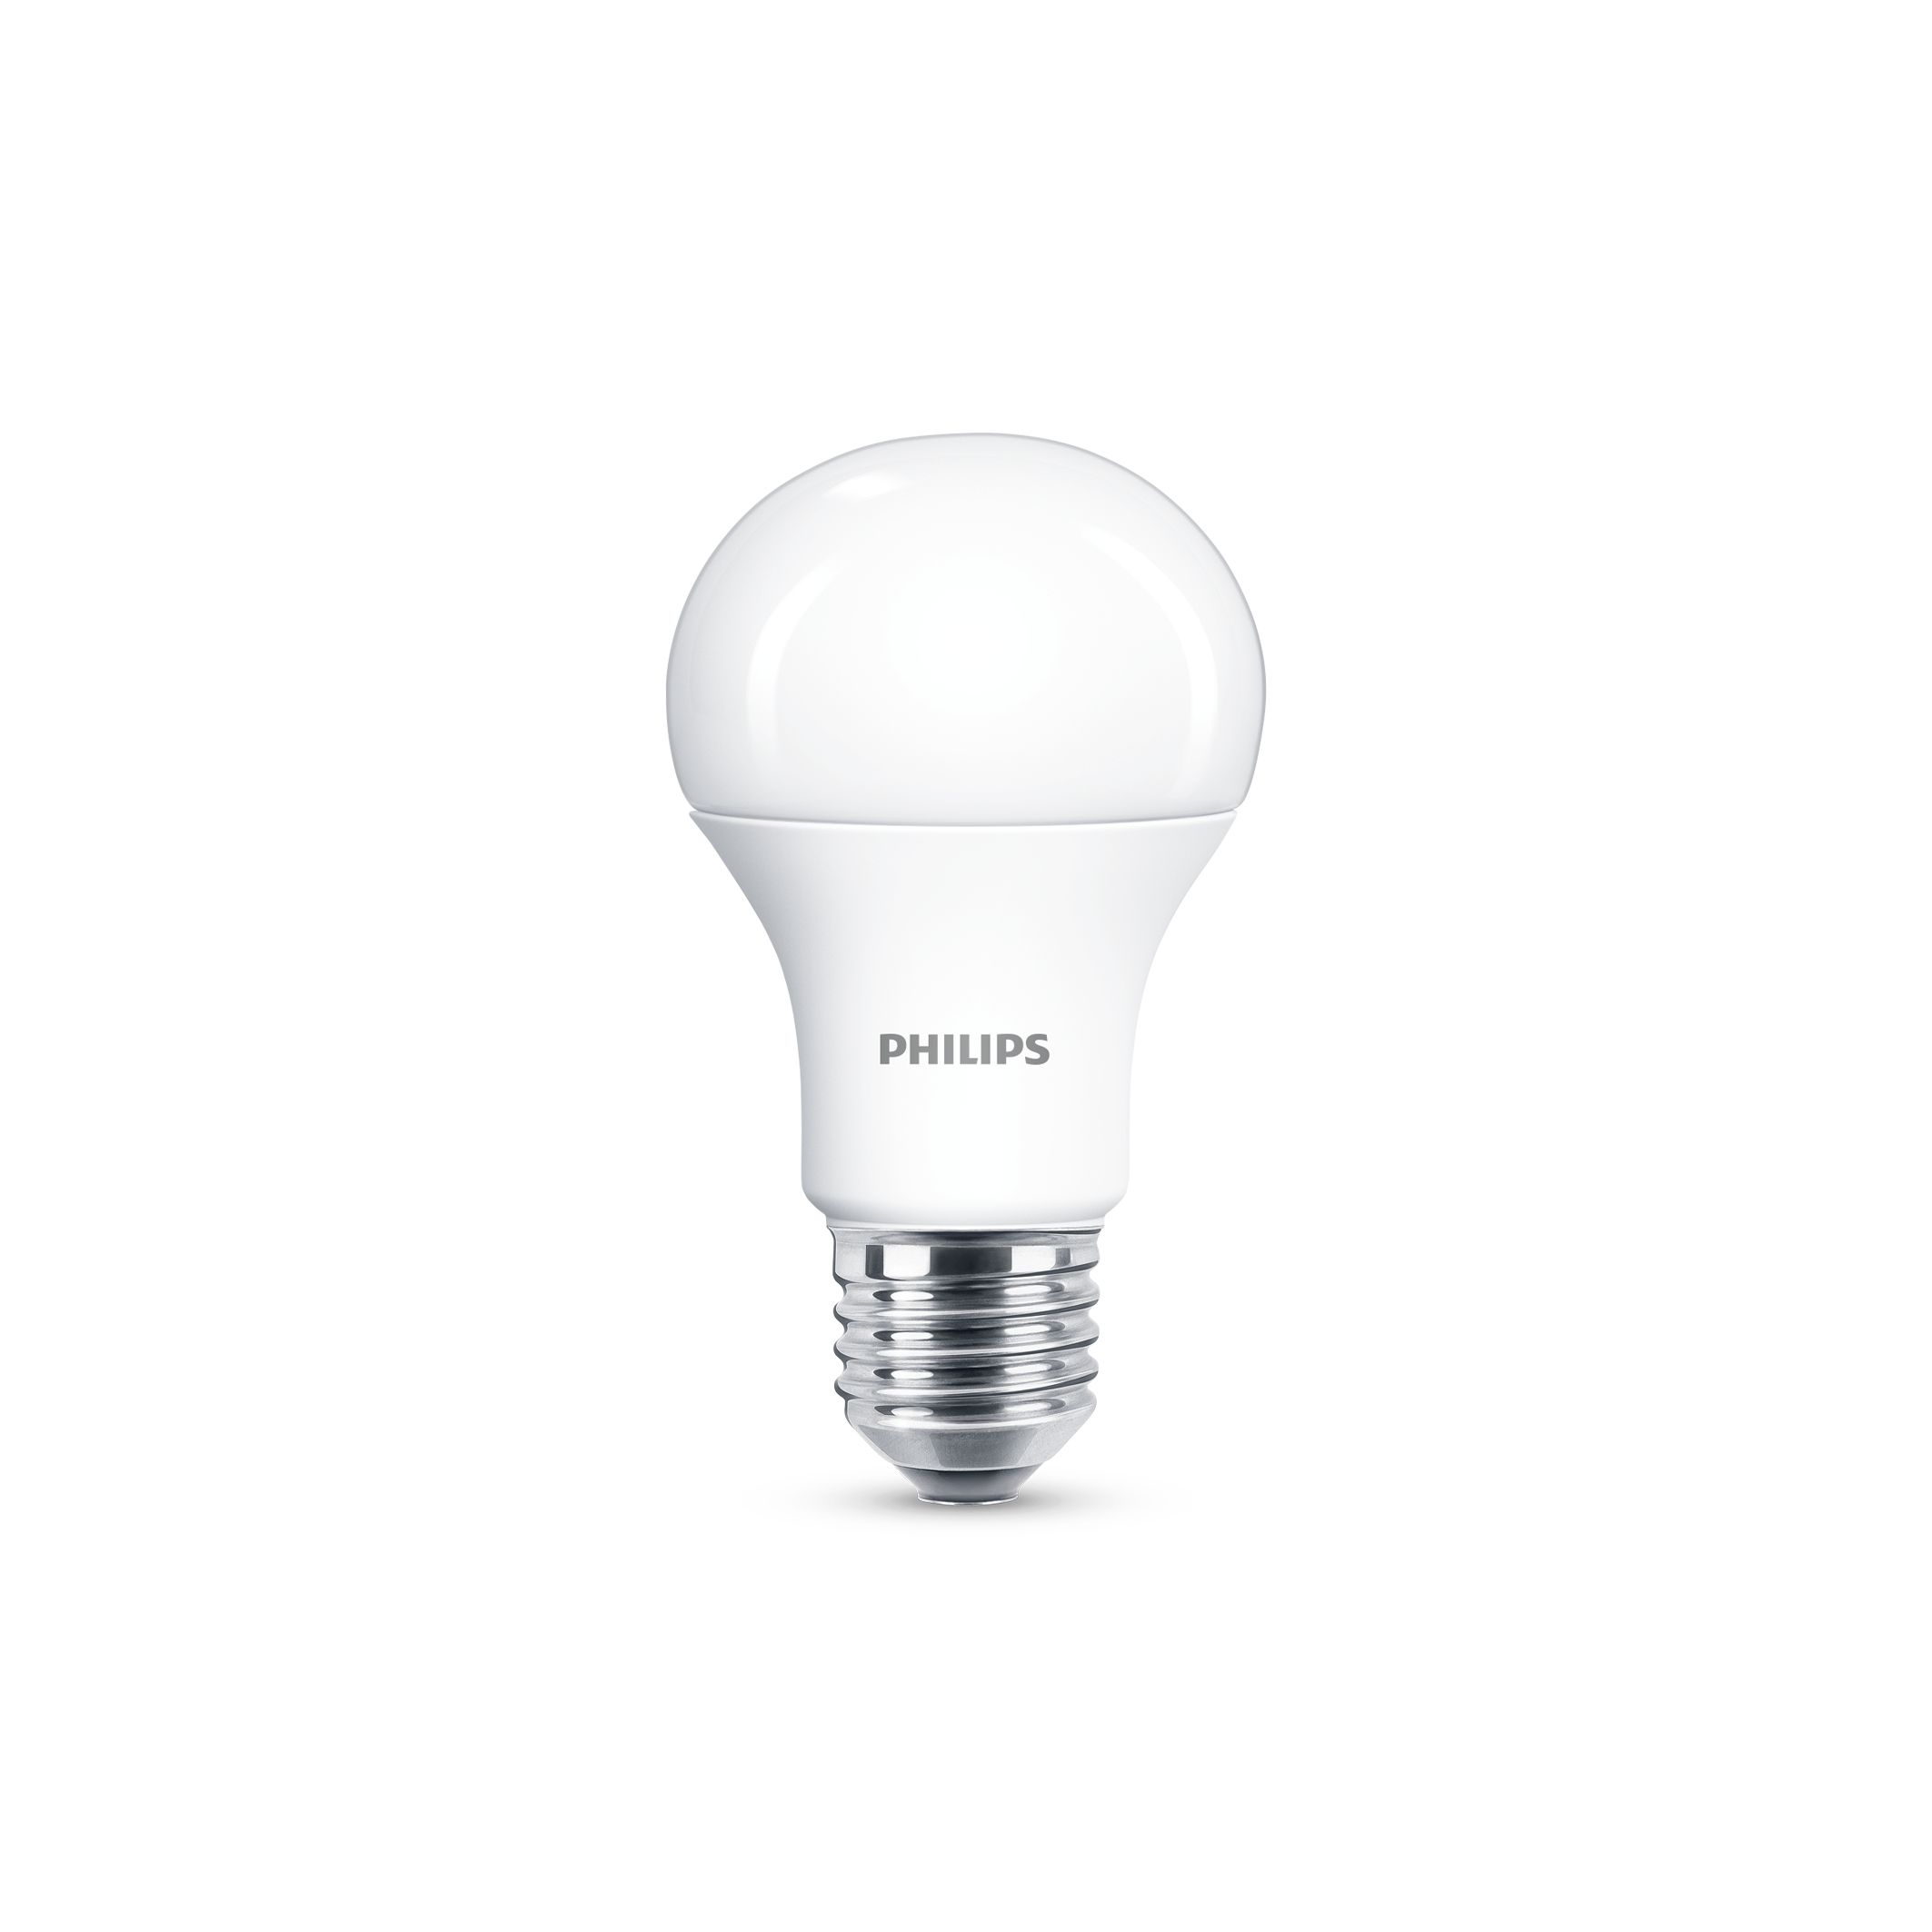 Standard 6979538 | Philips lighting